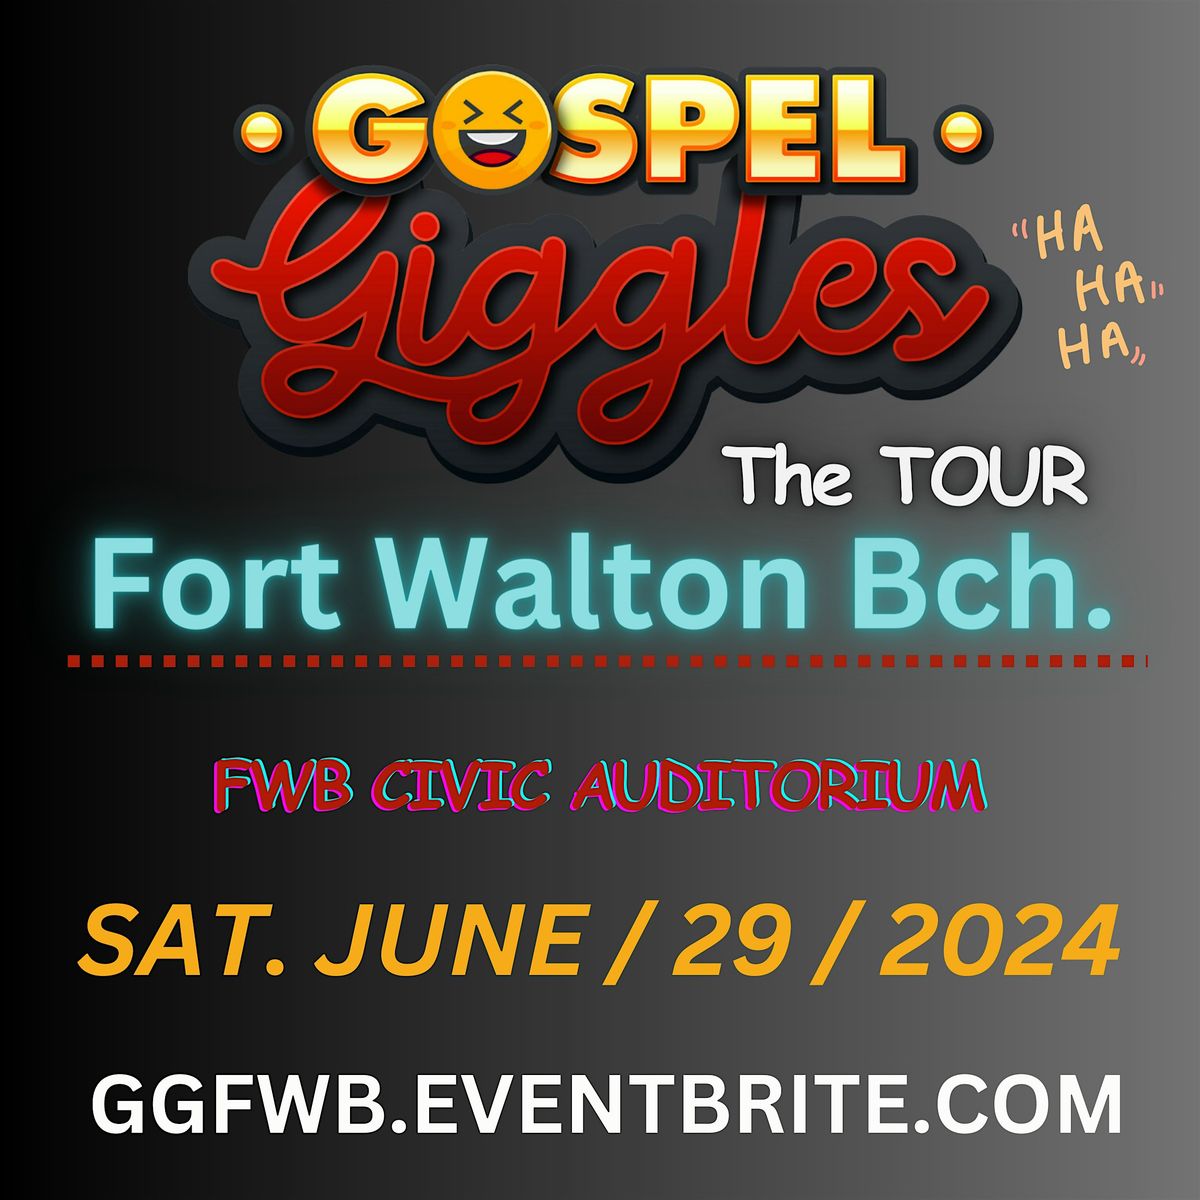 Gospel GIGGLES Fort Walton Bch.